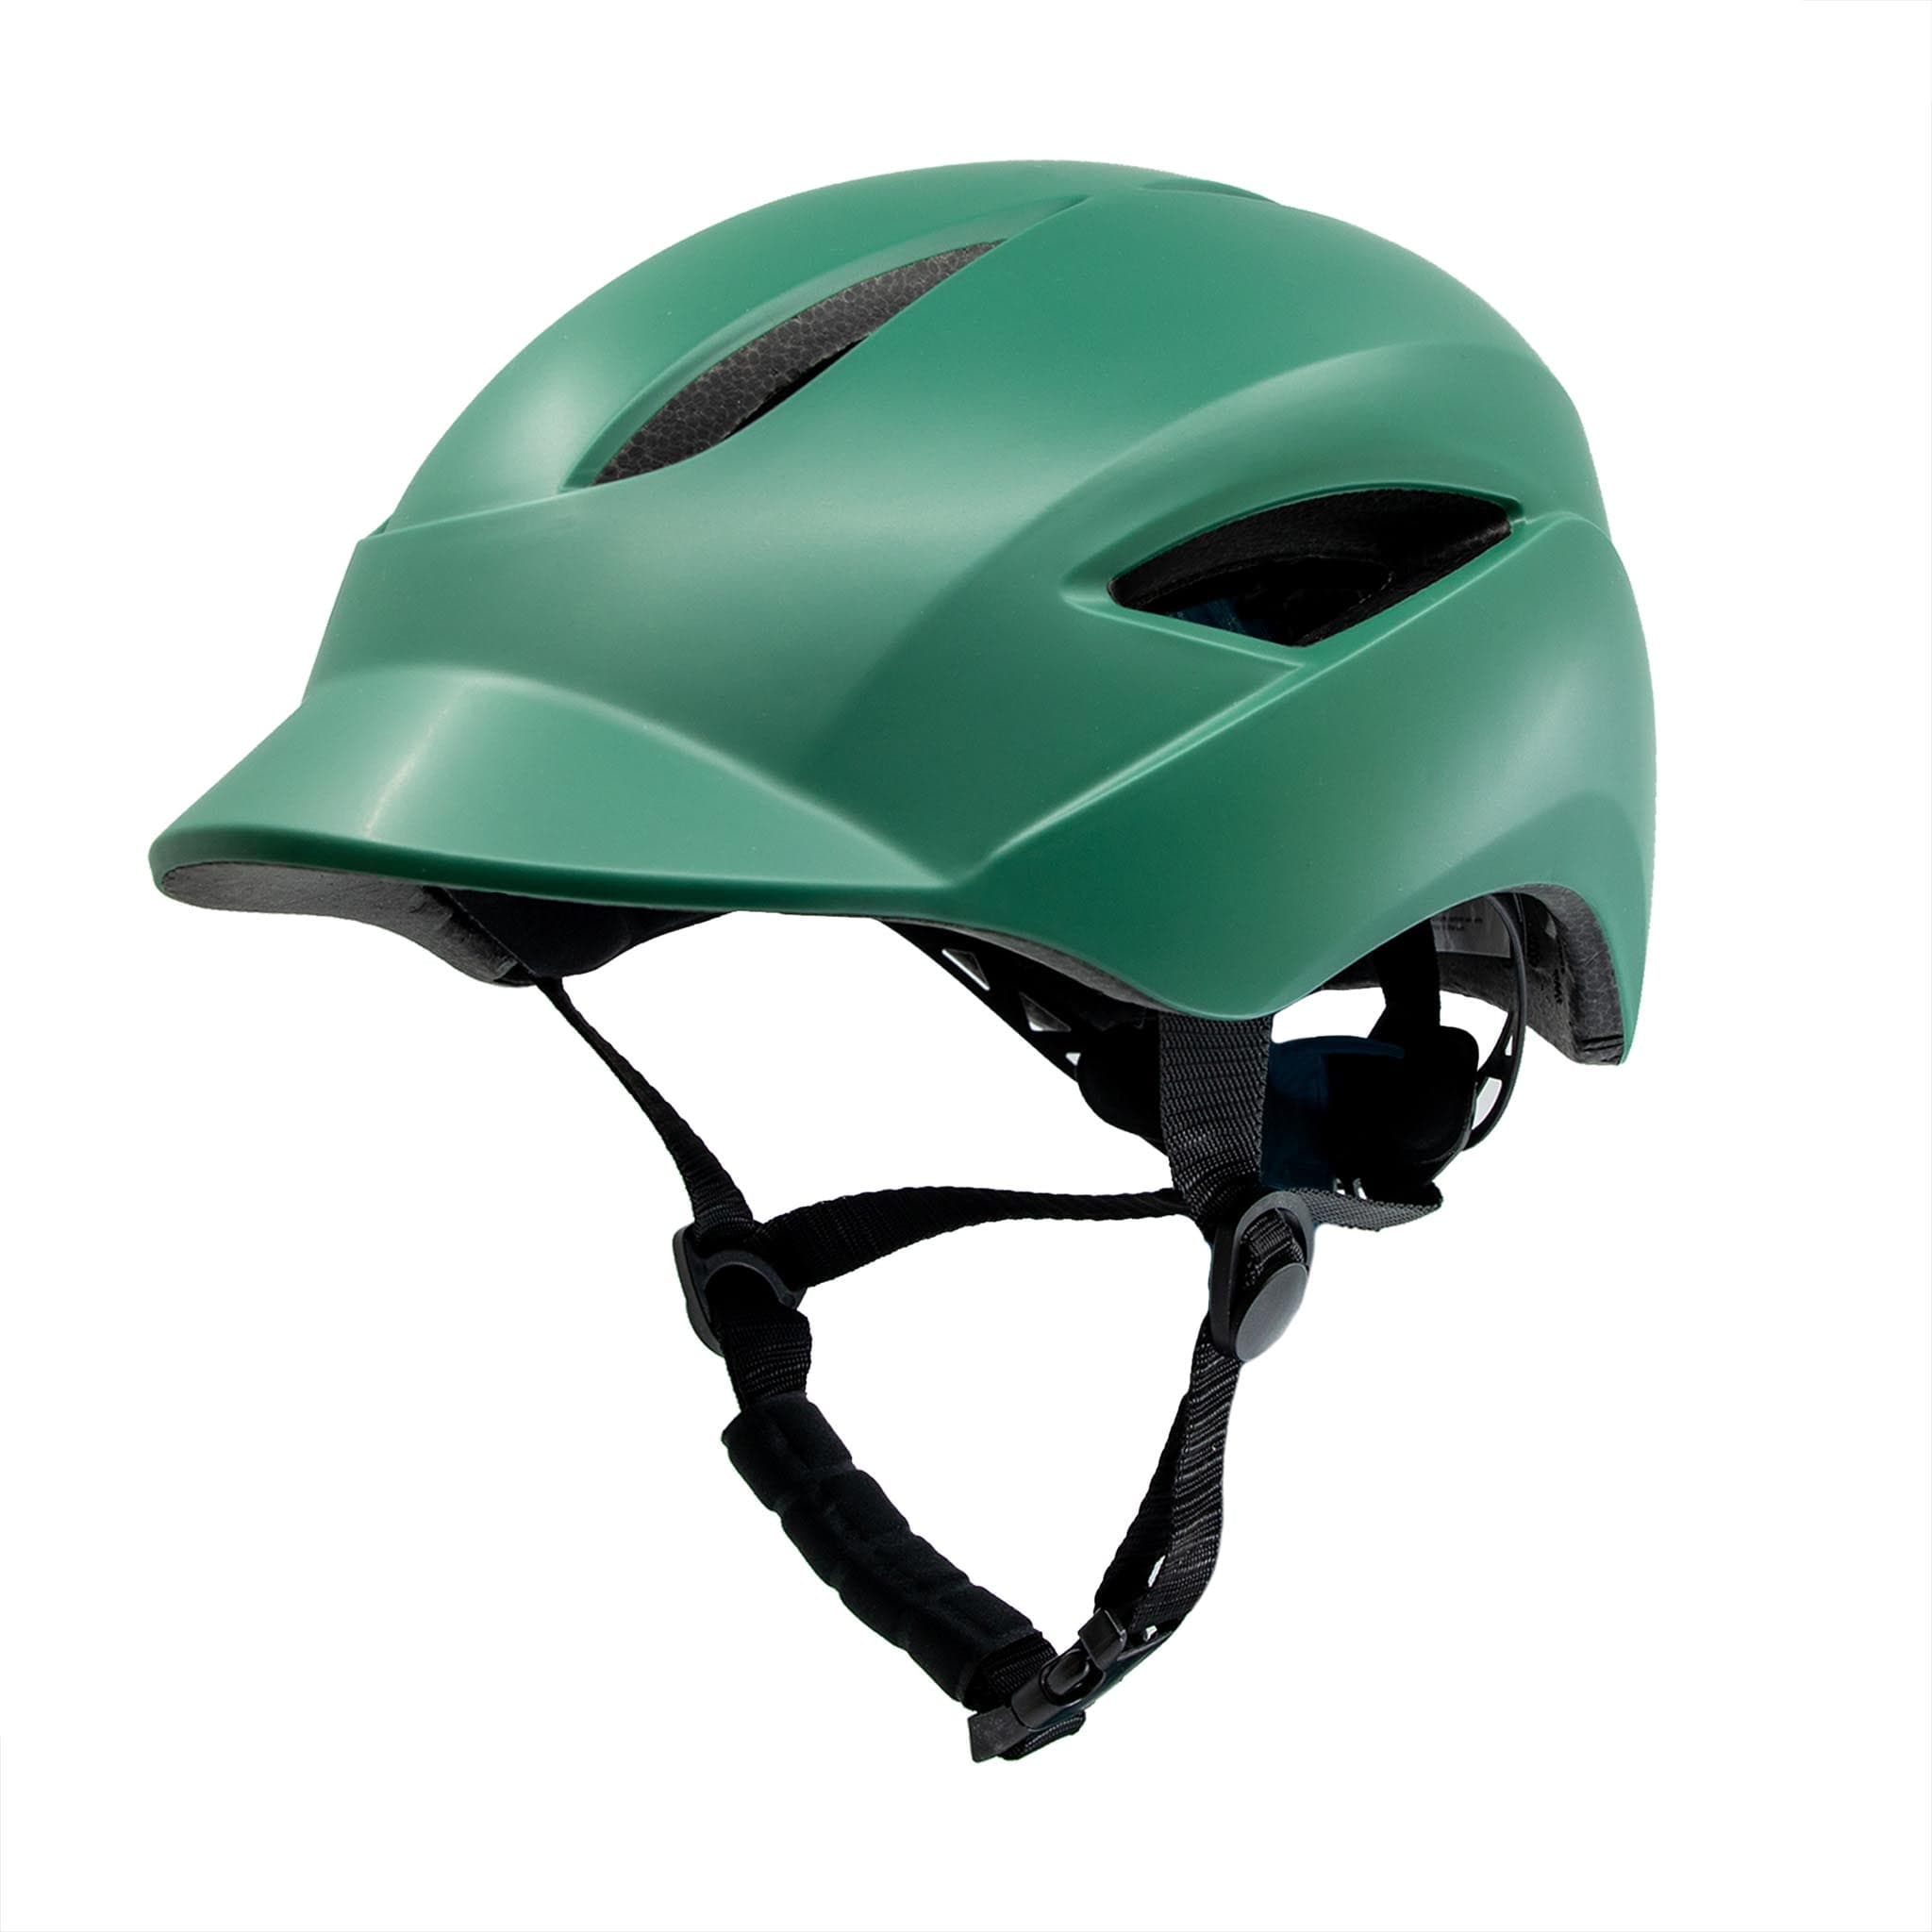 Matt green Aero bicycle helmet for adults. Cool women cycle helmets